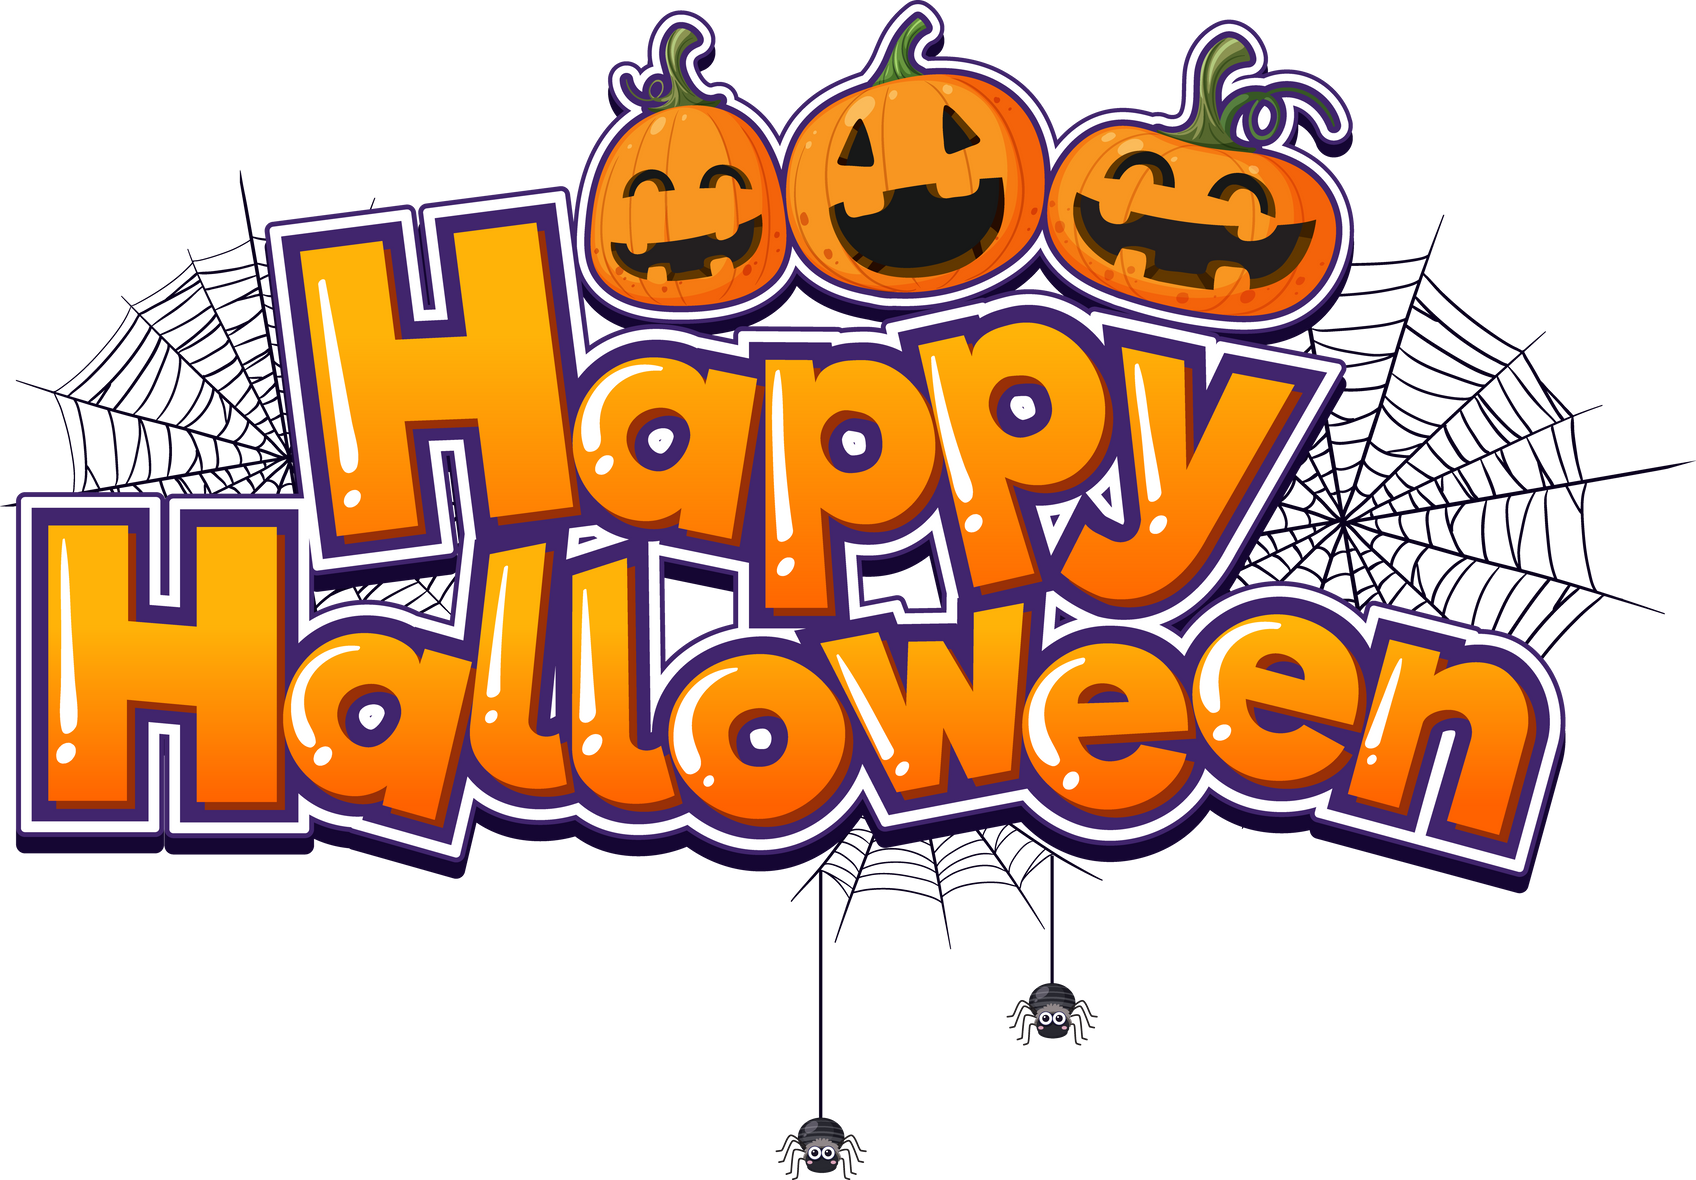 Happy Halloween Font Logo